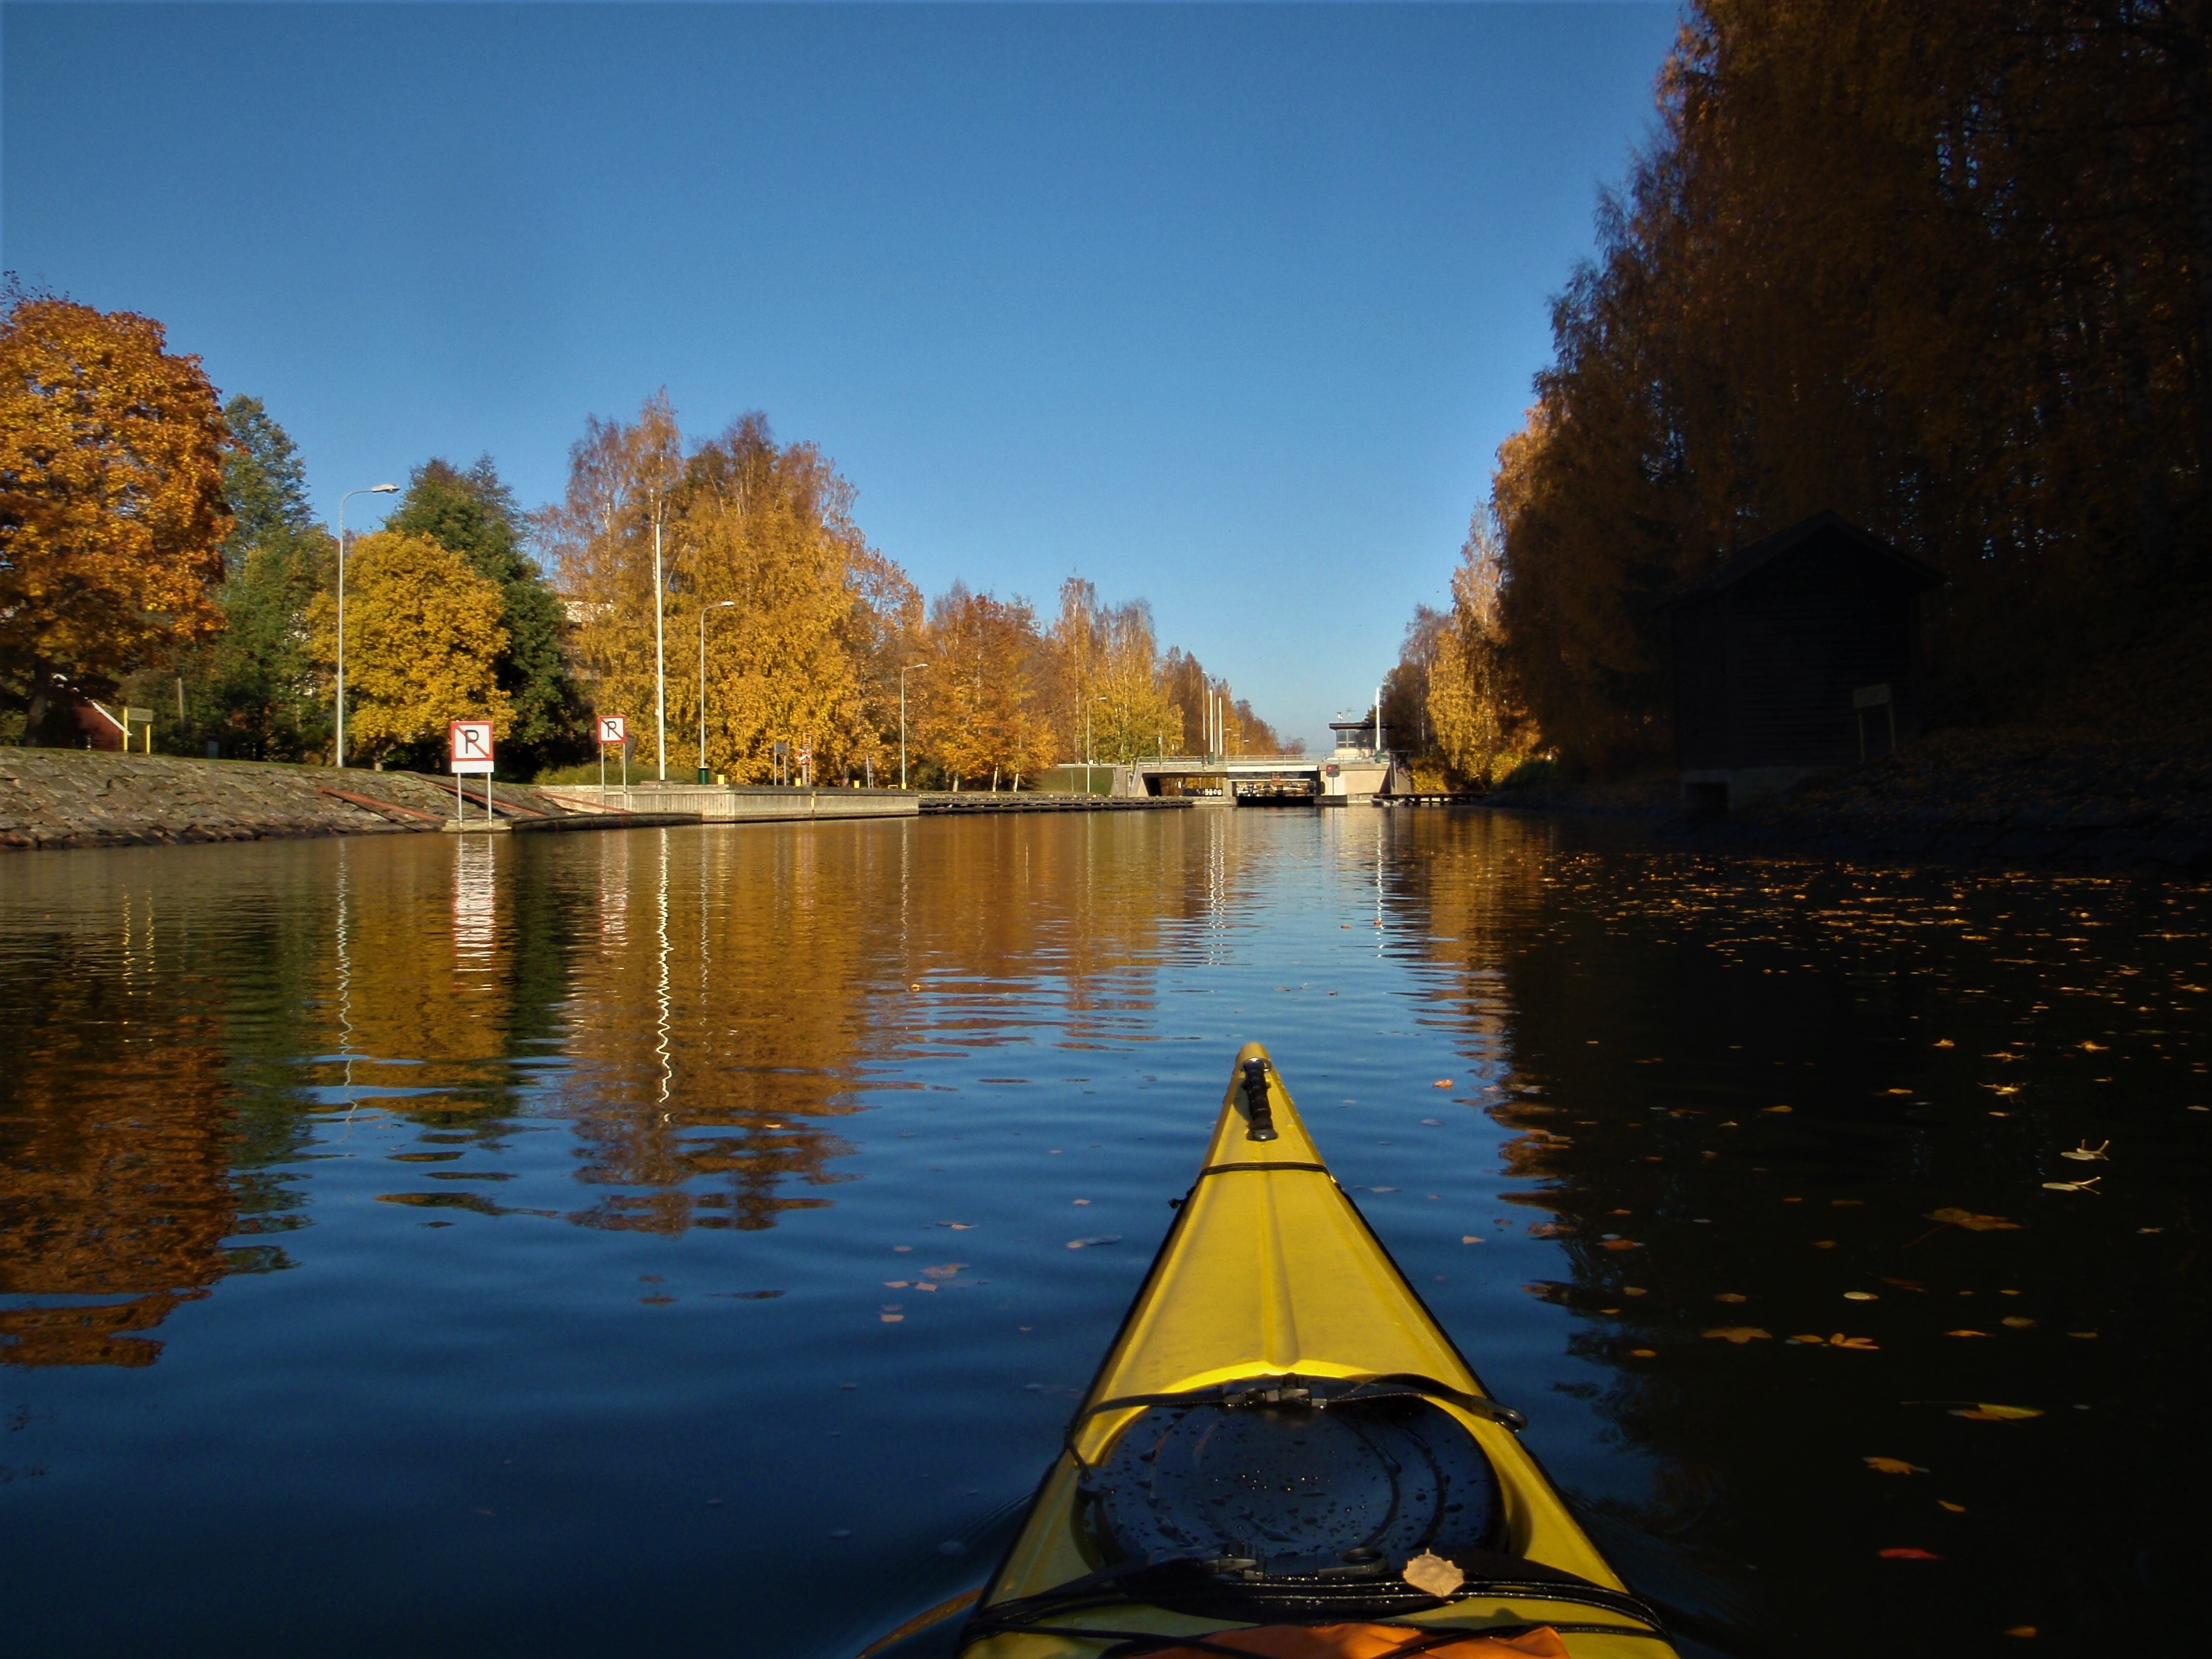 Vääksy canal, Finland   Kayak rental